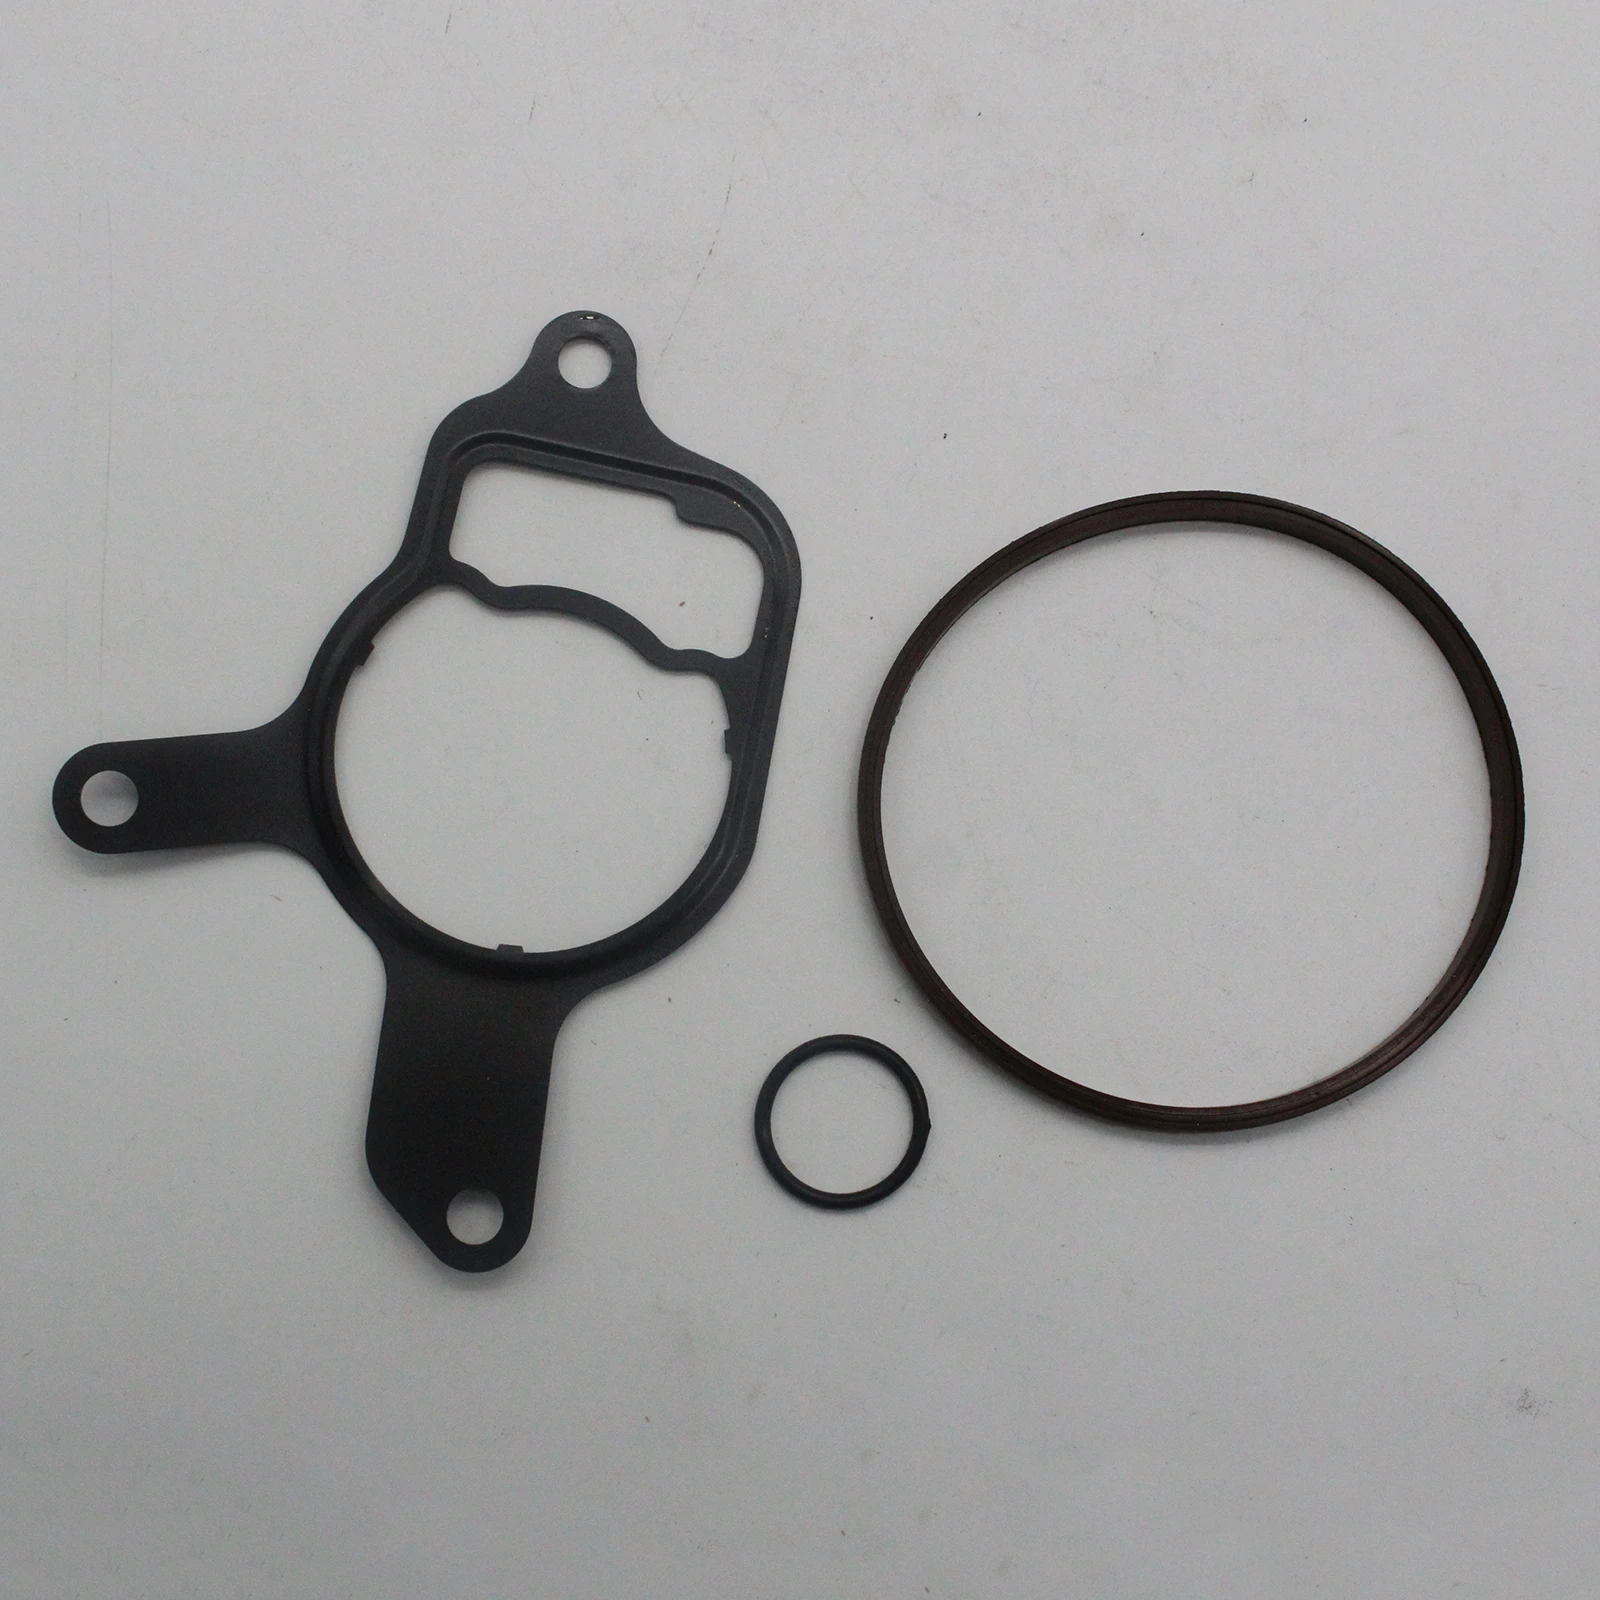 Automobile Professional 2.5L Vacuum Pump Repair Re-seal Kit for Volkswagen Beetle Rabbit Passat and for Audi TT RS